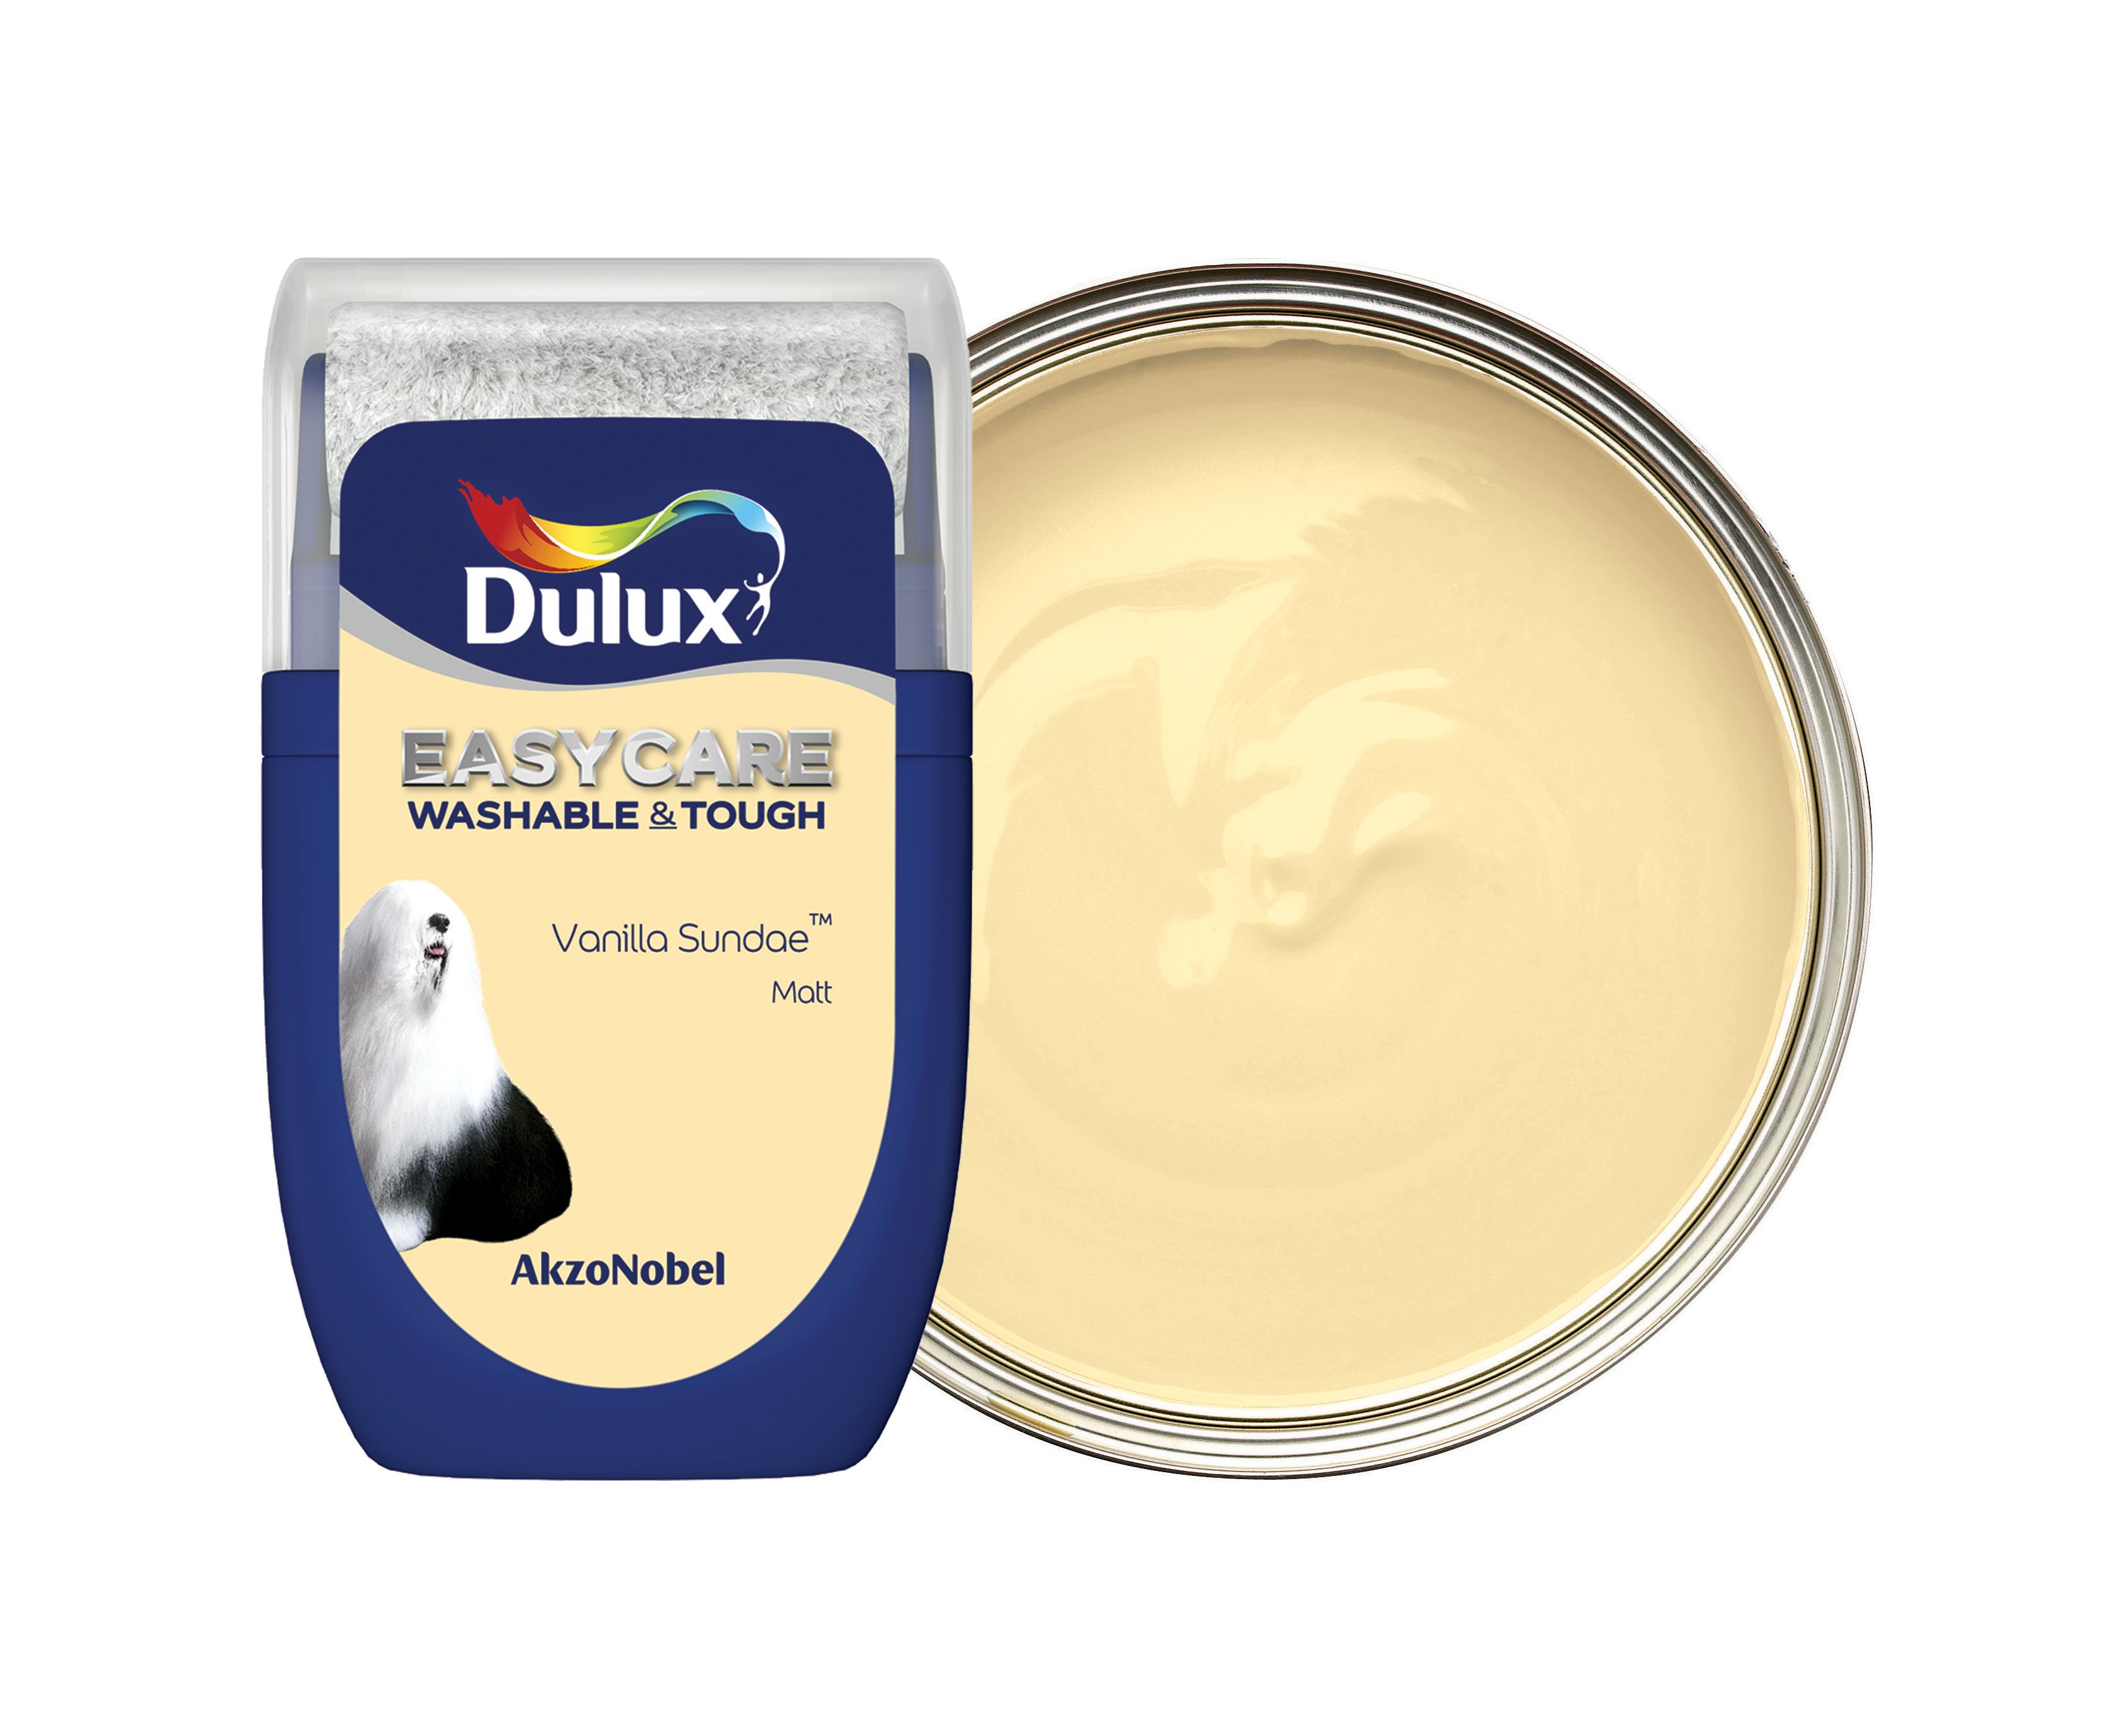 Dulux Easycare Washable & Tough Paint Tester Pot - Vanilla Sundae - 30ml